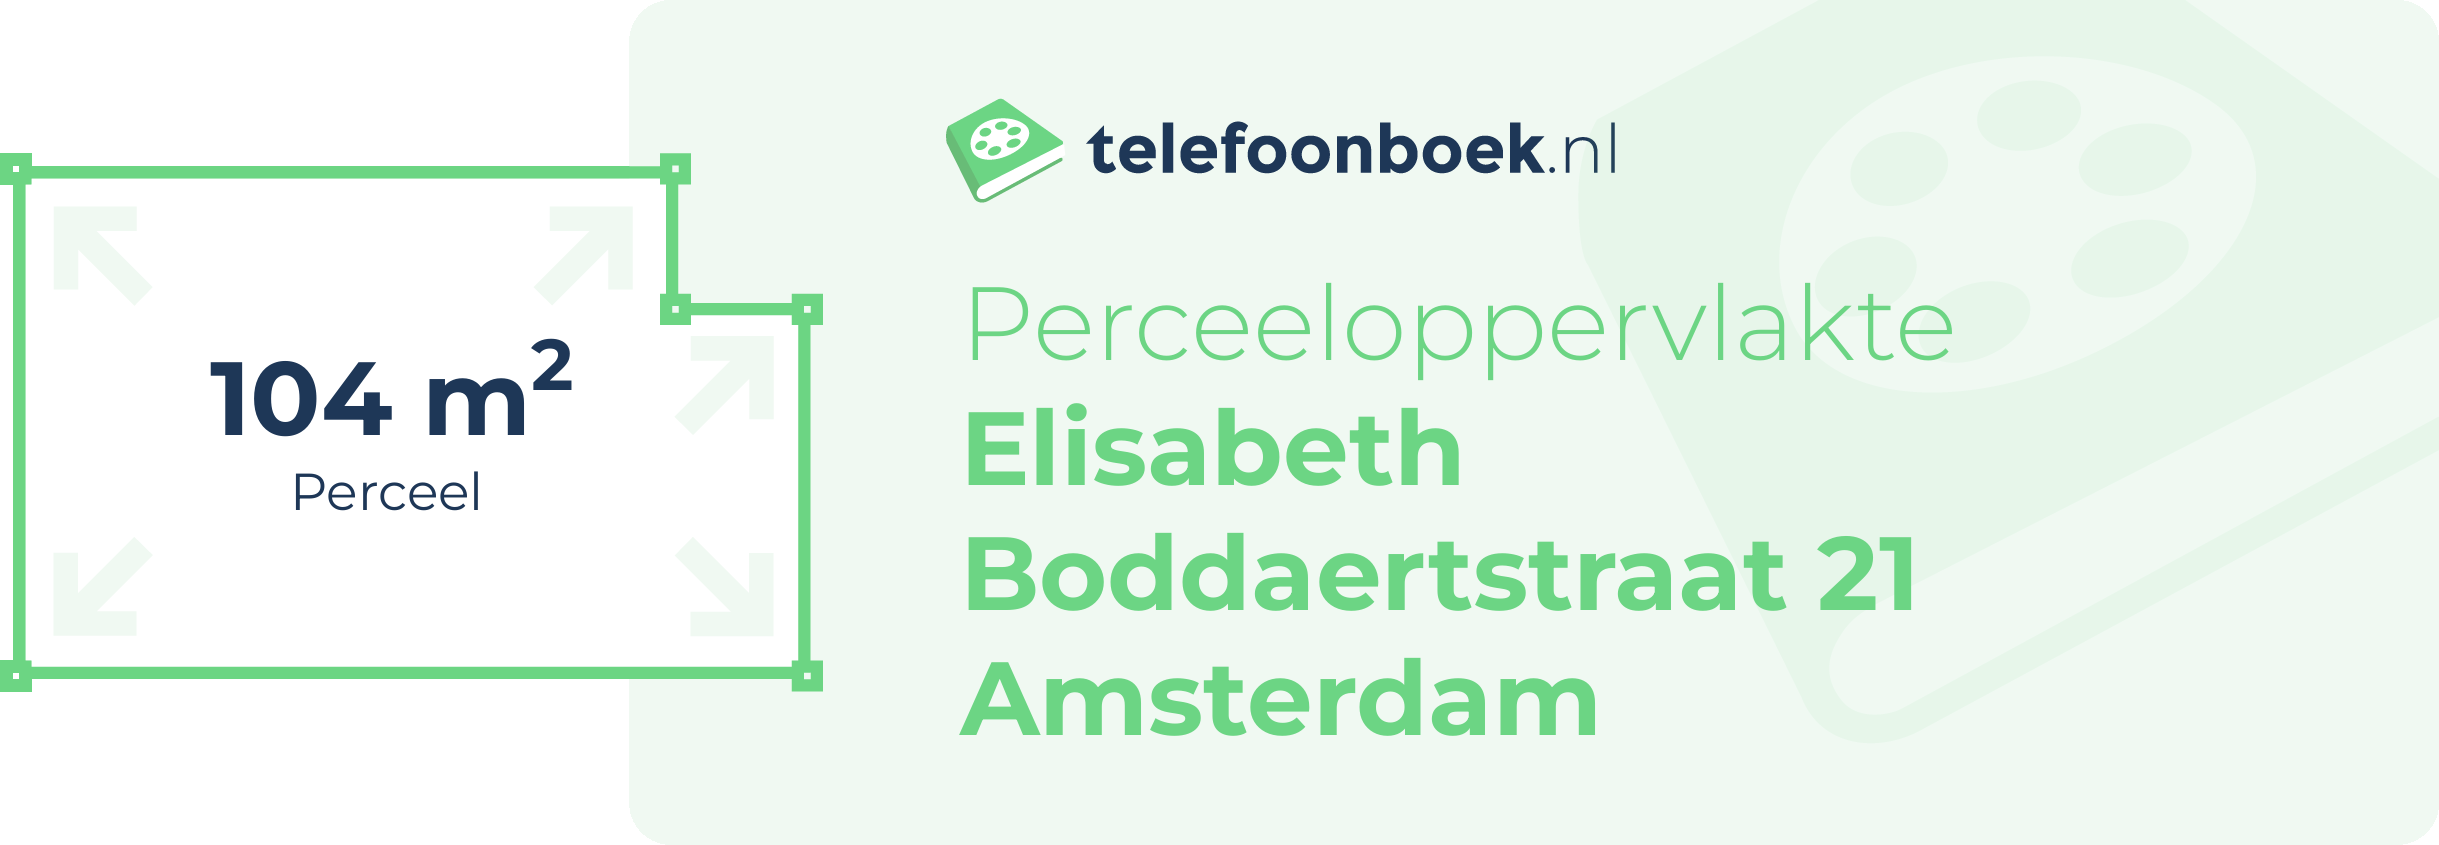 Perceeloppervlakte Elisabeth Boddaertstraat 21 Amsterdam